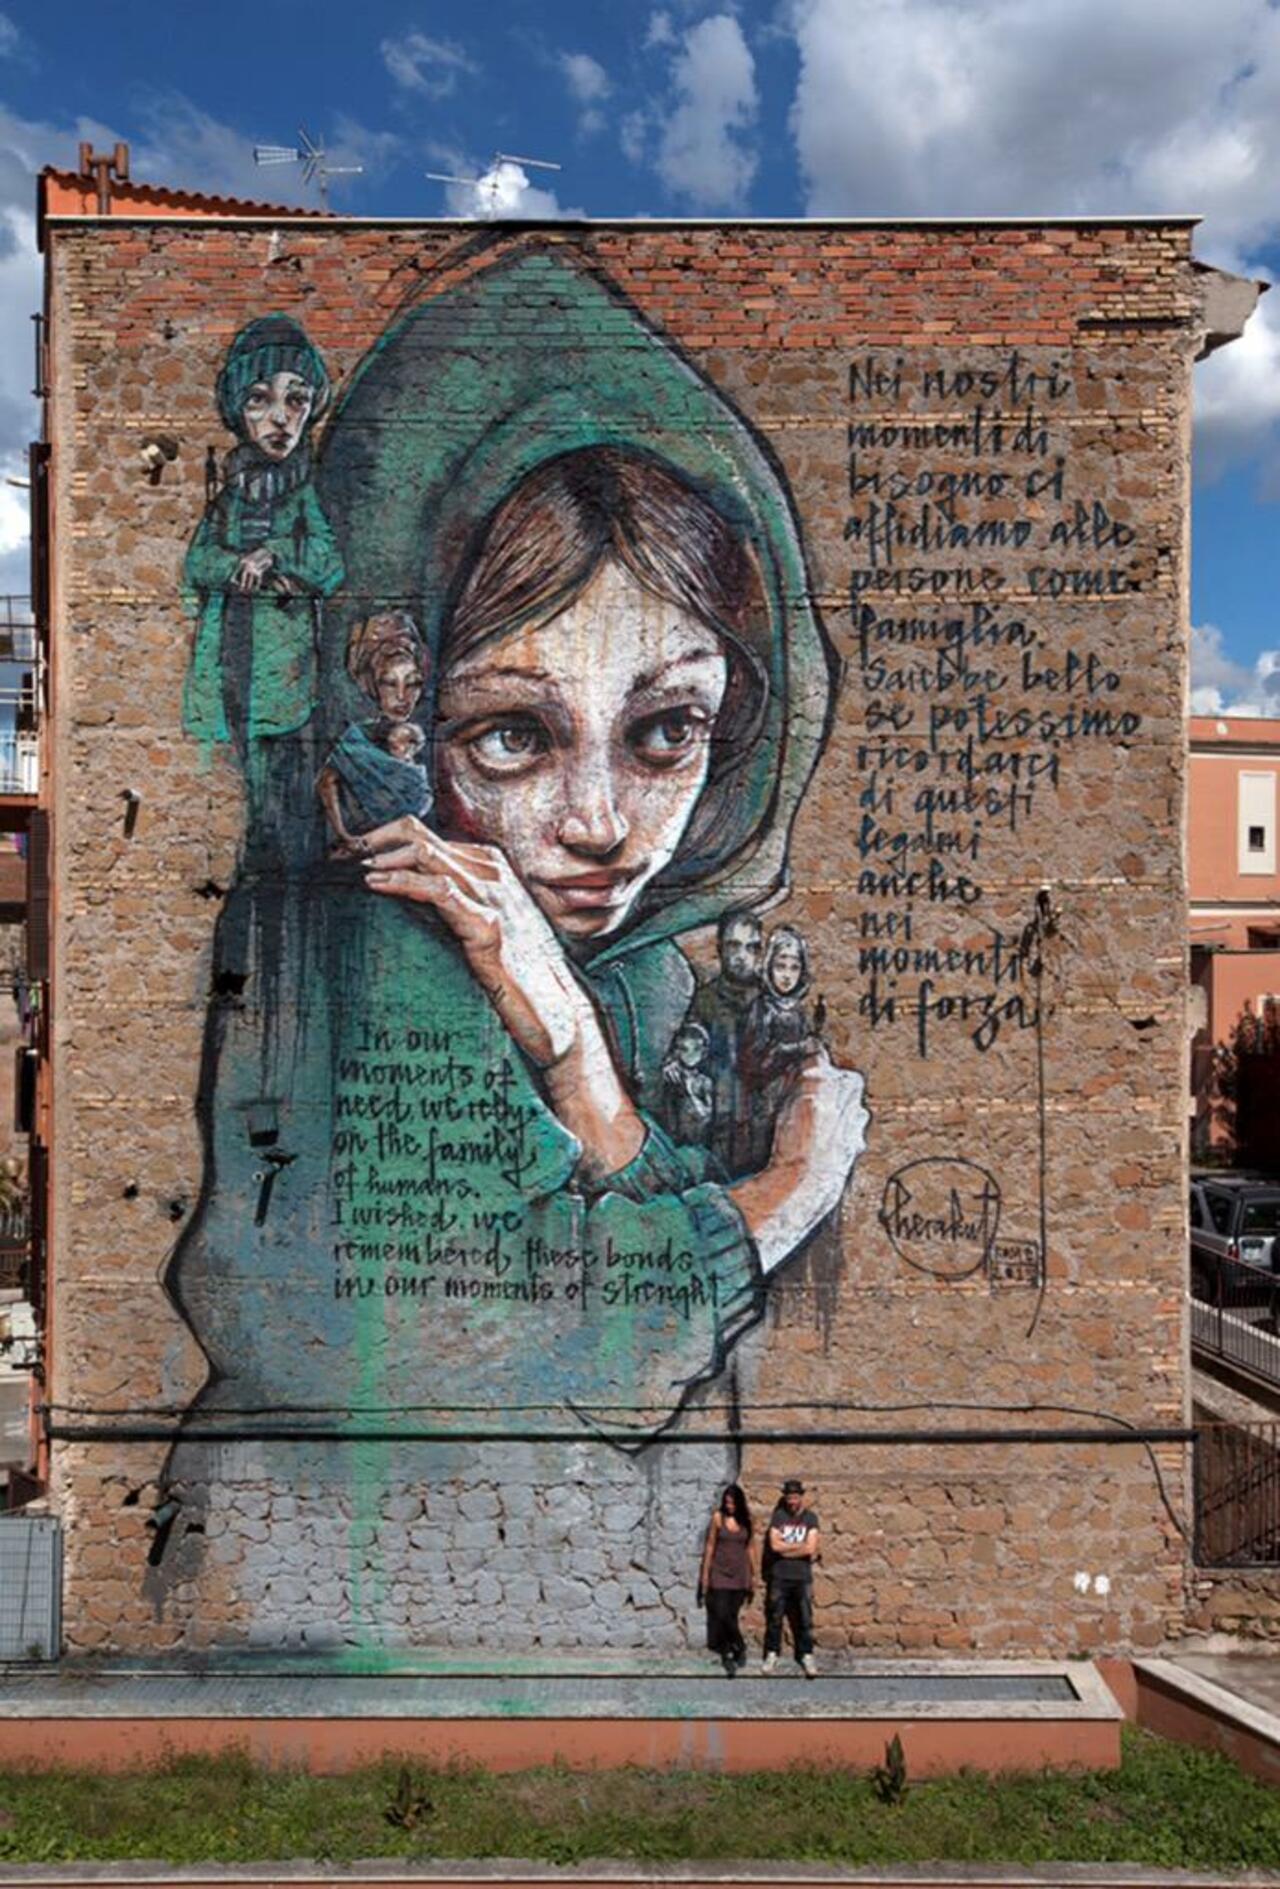 #Herakut creates a new #mural in #Rome #Italy #switch #streetart #graffiti #bedifferent #arte #art http://t.co/J9fMlgdtDW